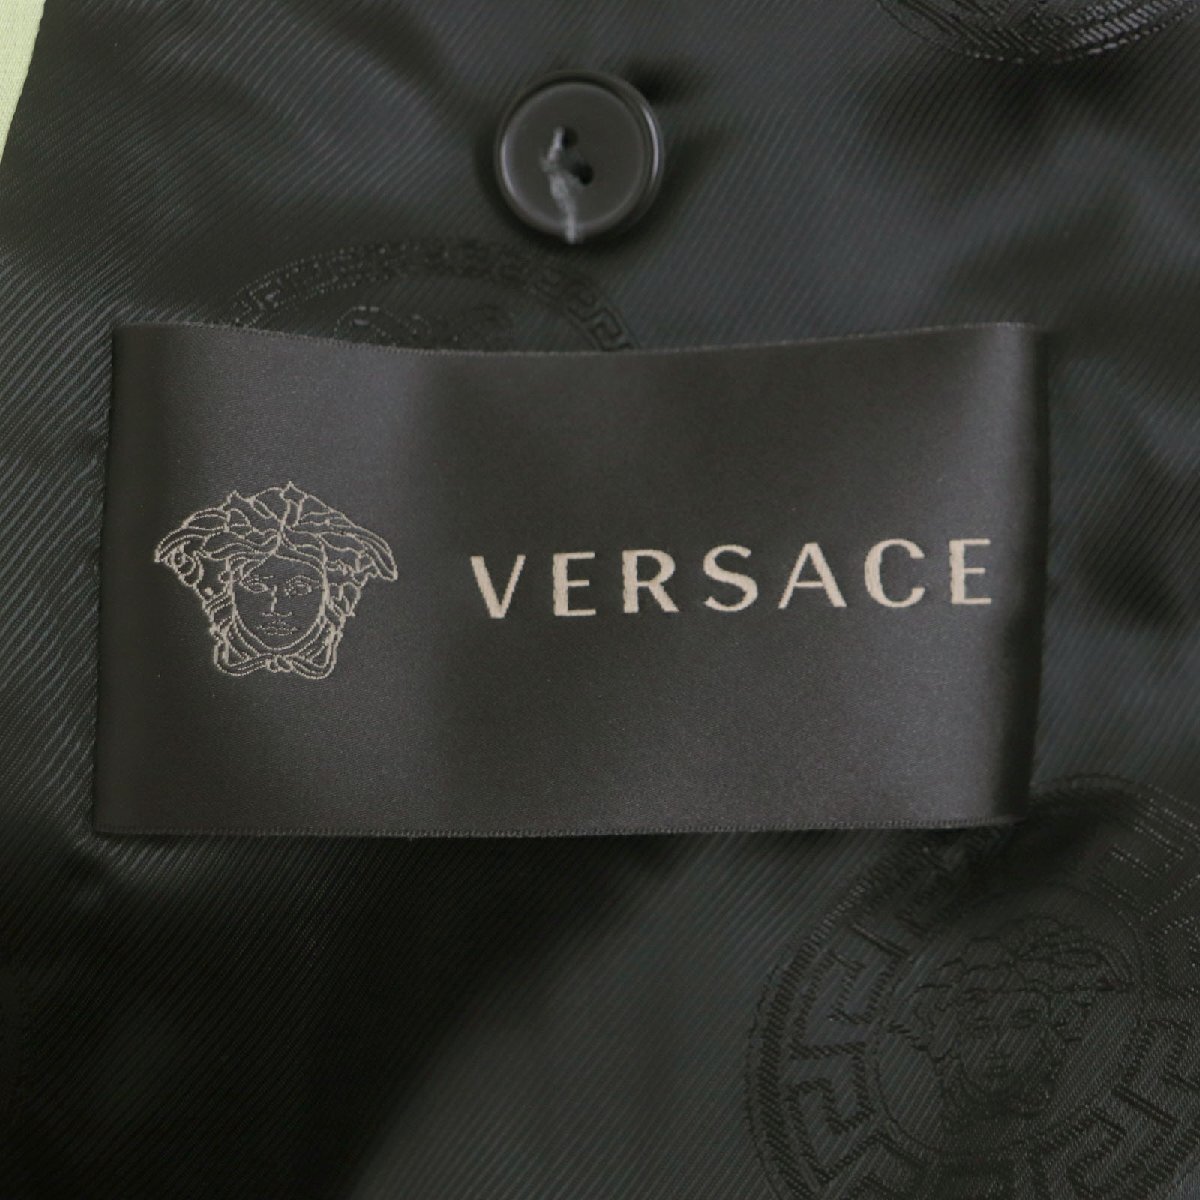  beautiful goods VERSACE Versace A66640mete.-sa floral print ZIP Bomber jacket multi 54 Italy made regular goods men's 